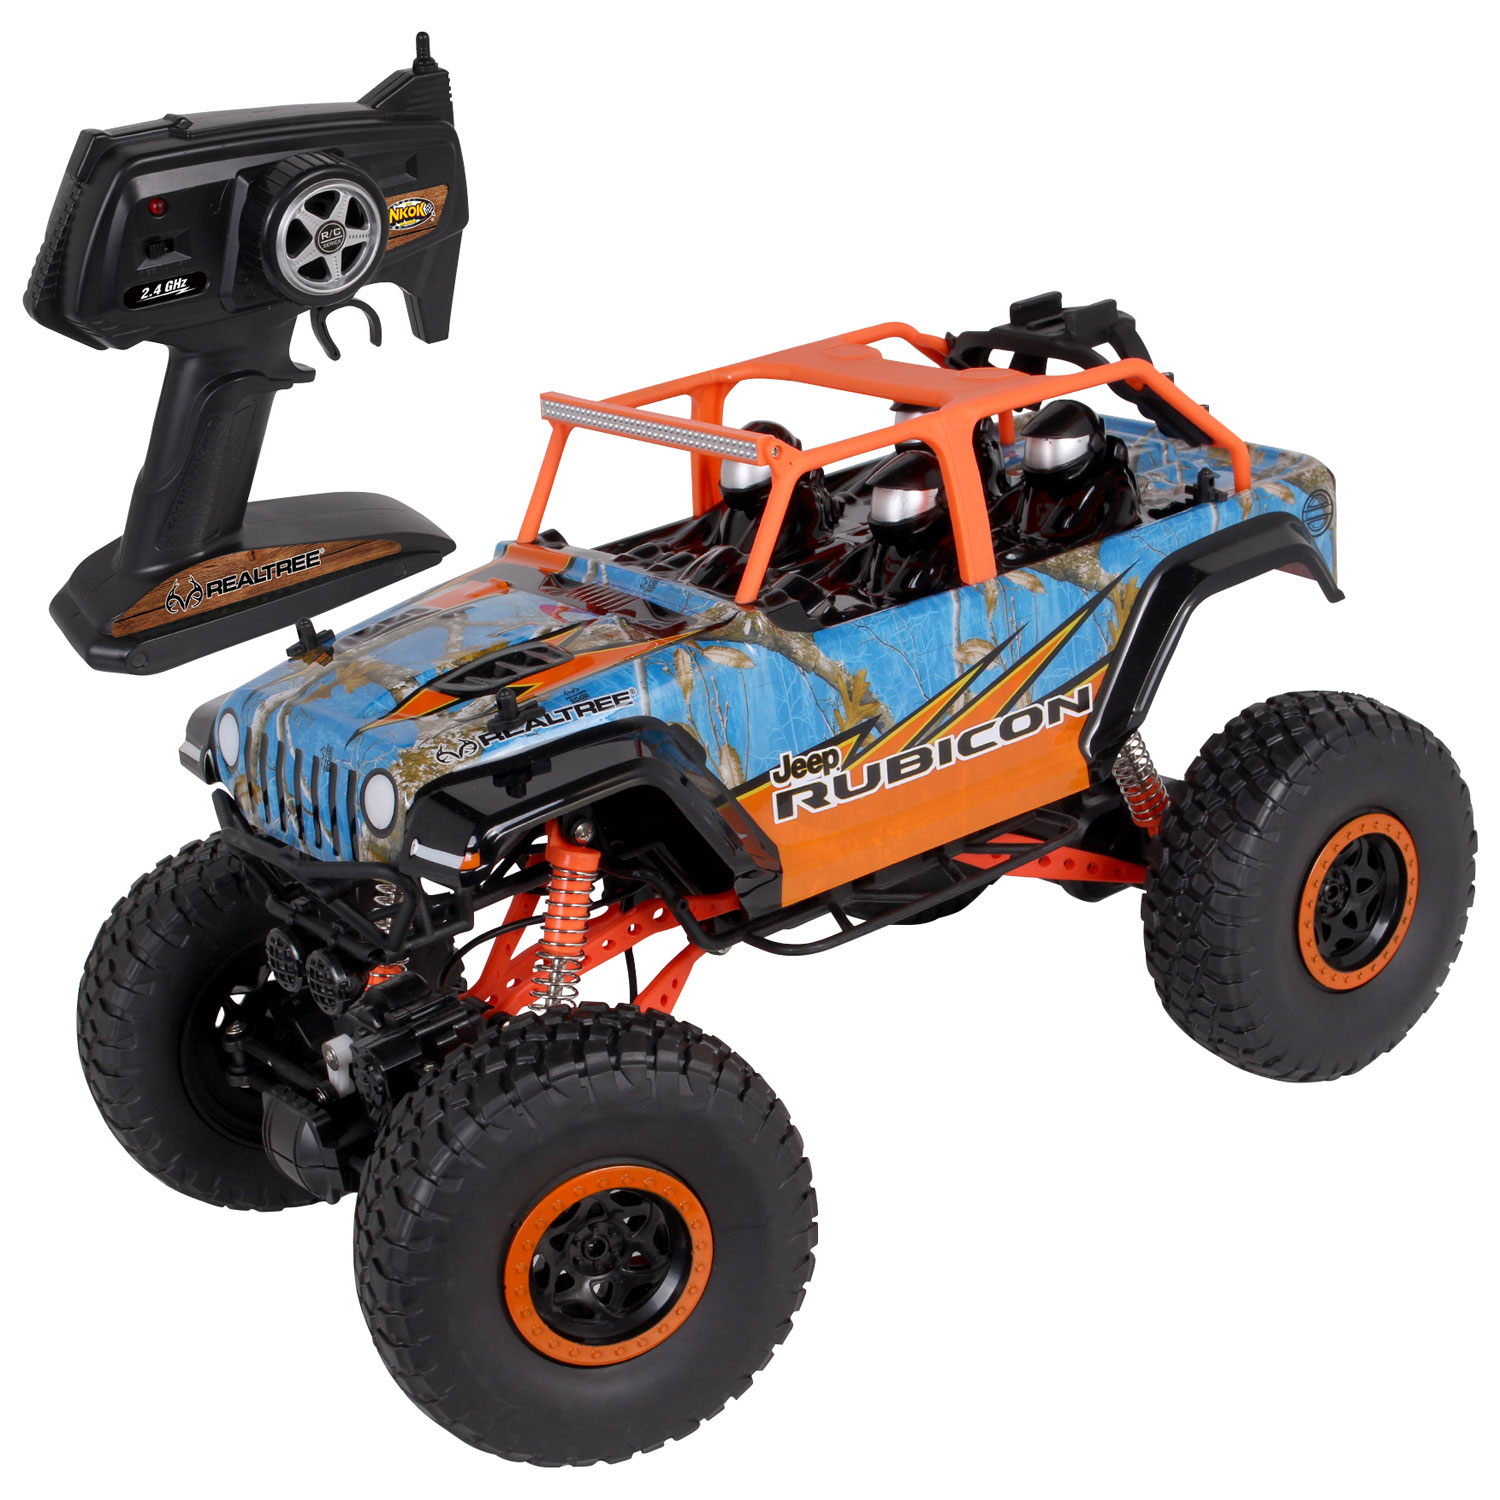 NKOK X-Treme Realtree Jeep Wrangler RC Rock Crawler 1/10 Scale (80944) - Blue/Orange